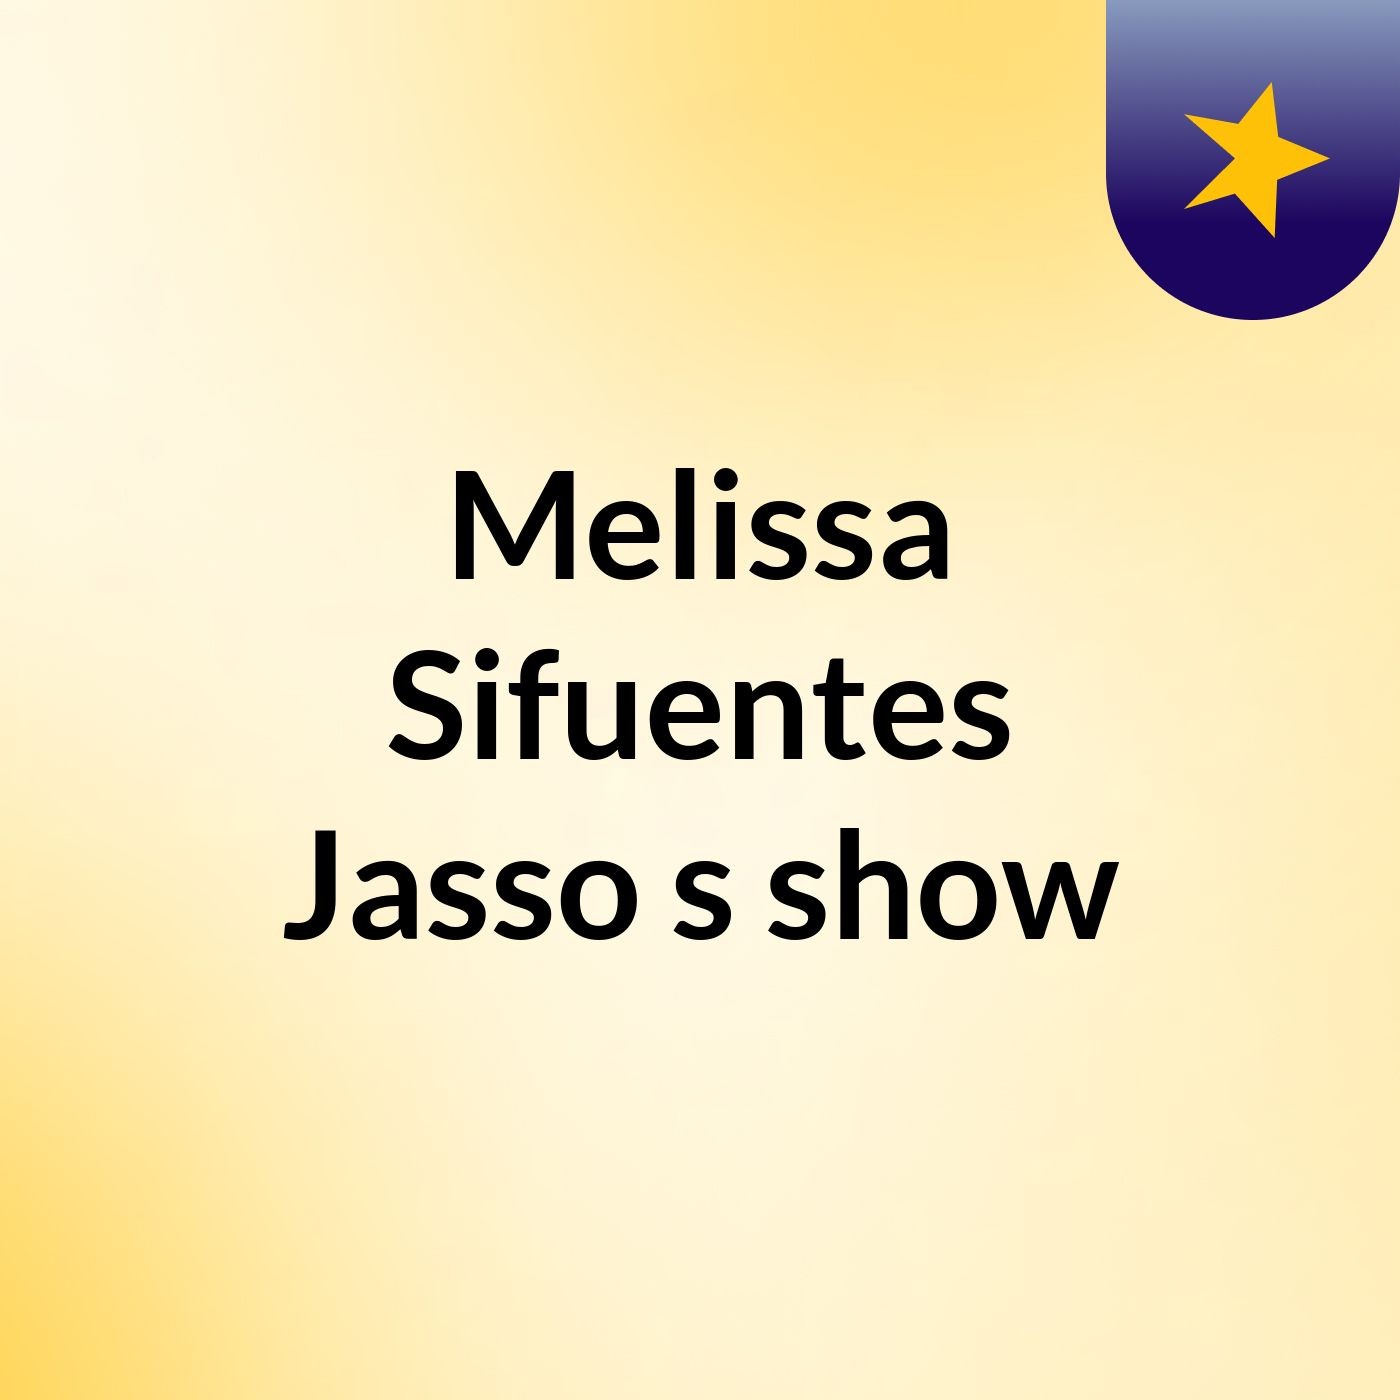 Melissa Sifuentes Jasso's show